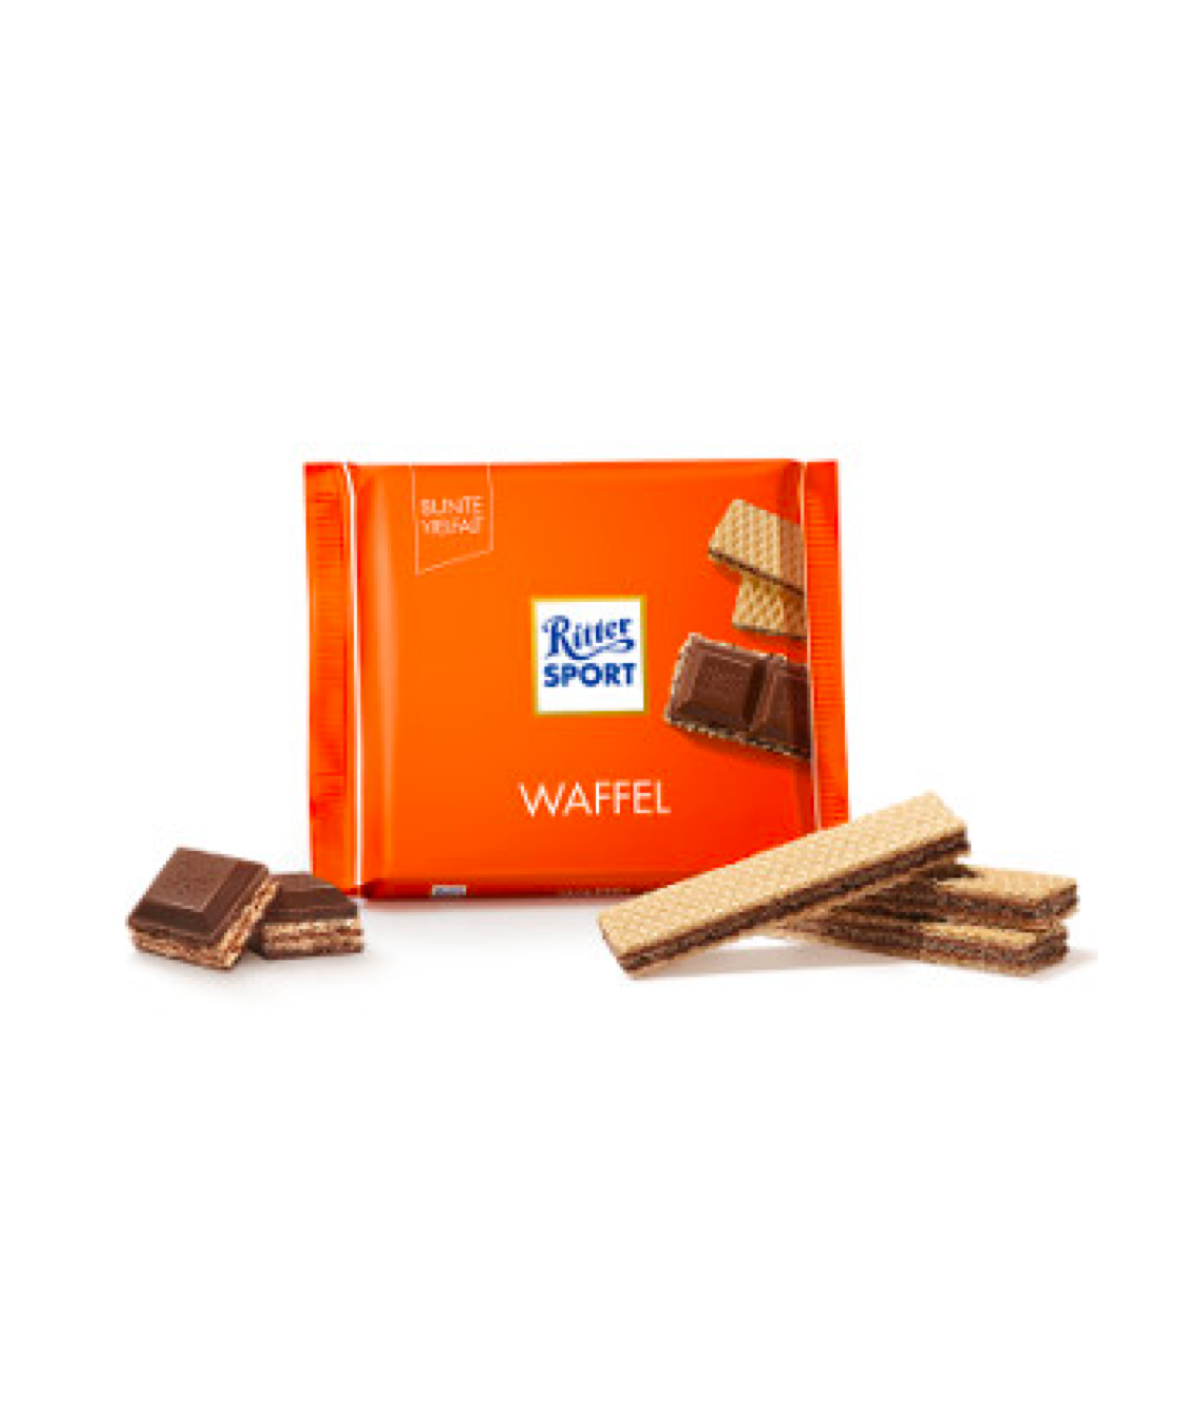 PANIER GARNI TOUT CHOCOLAT - Chocolaterie Ritter